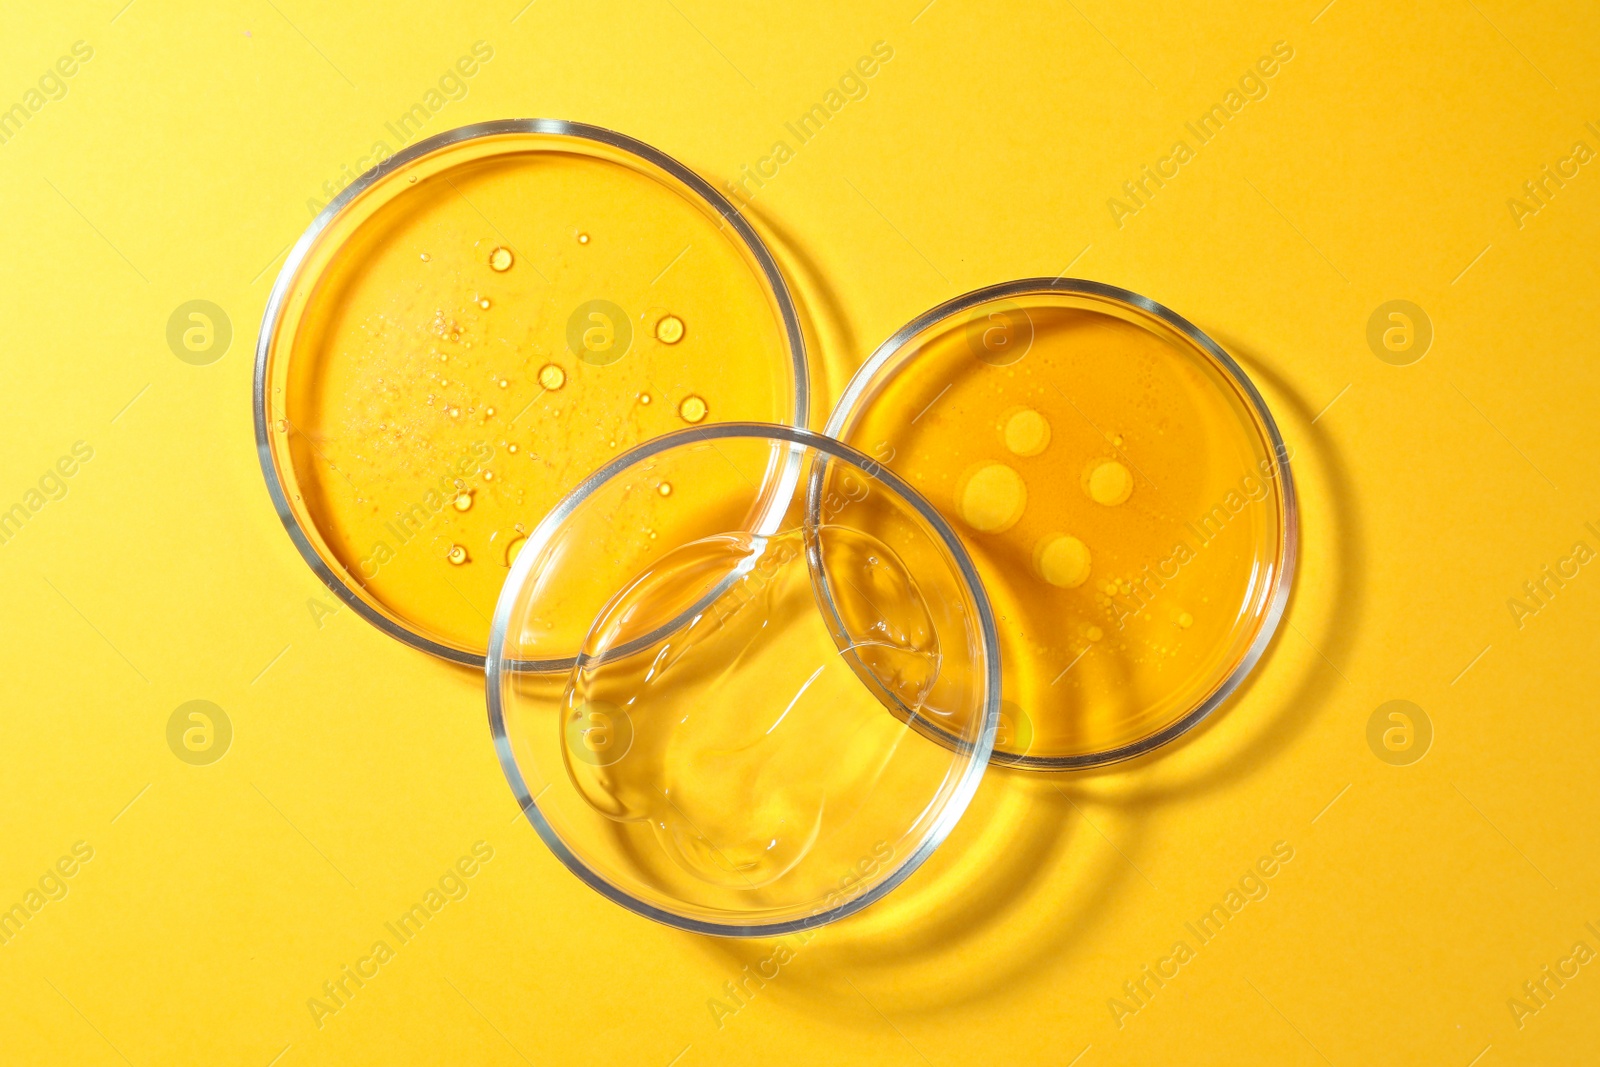 Photo of Petri dishes with liquids on orange background, flat lay